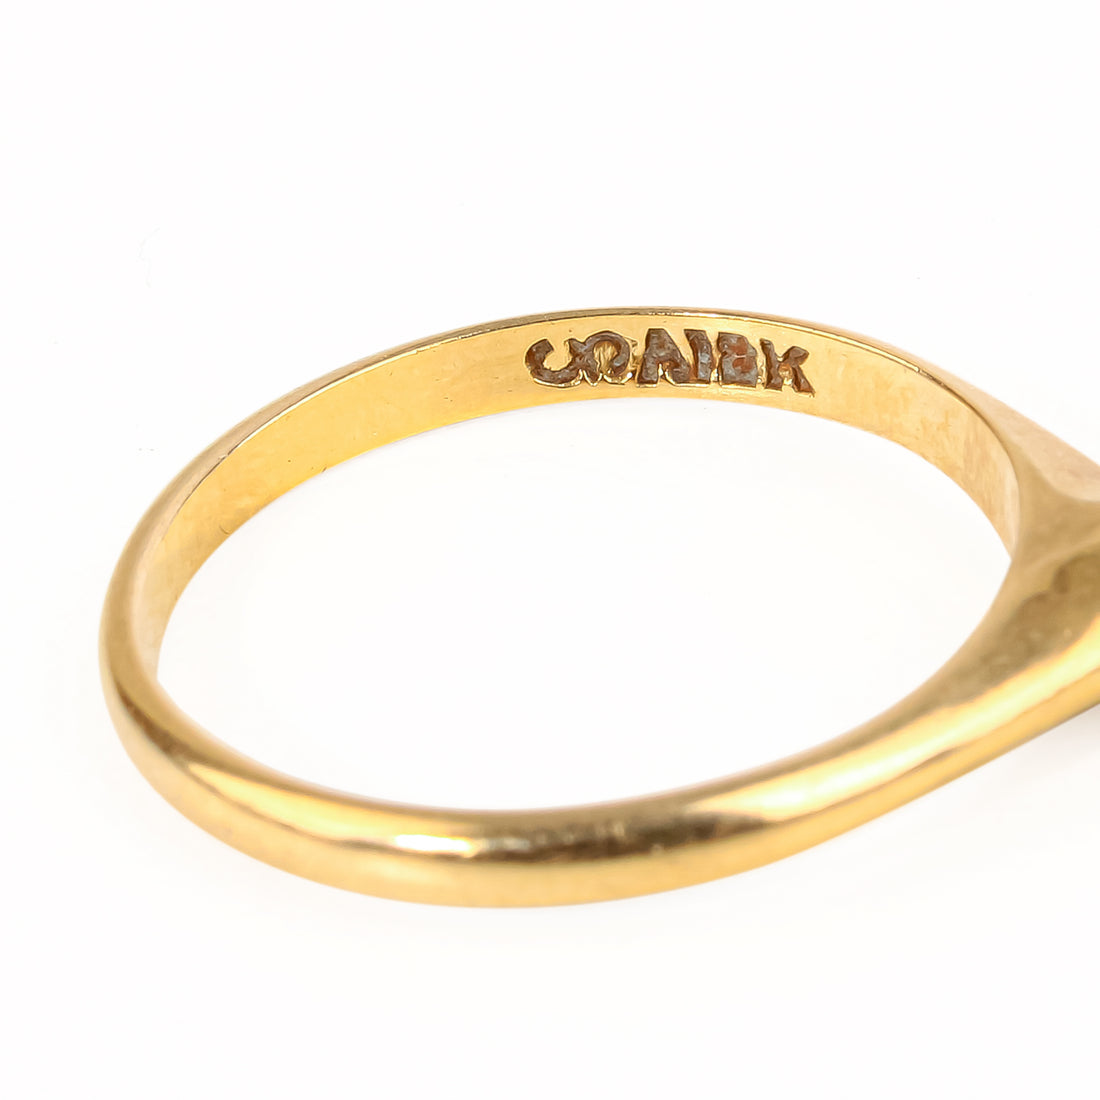 18K Yellow Gold European Cut Diamond Solitaire Ring